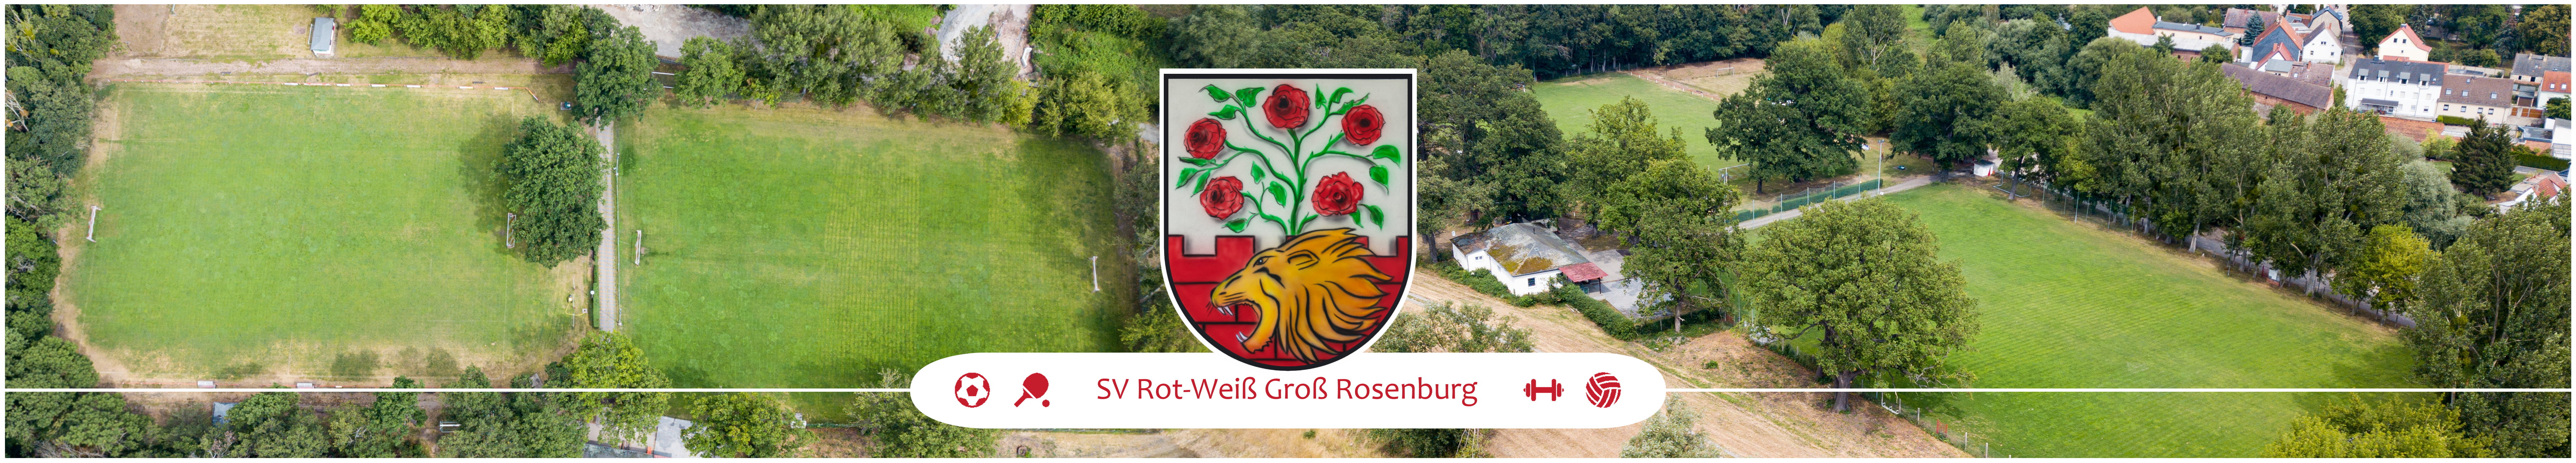 SV Rot-Weiß Groß Rosenburg Title Image